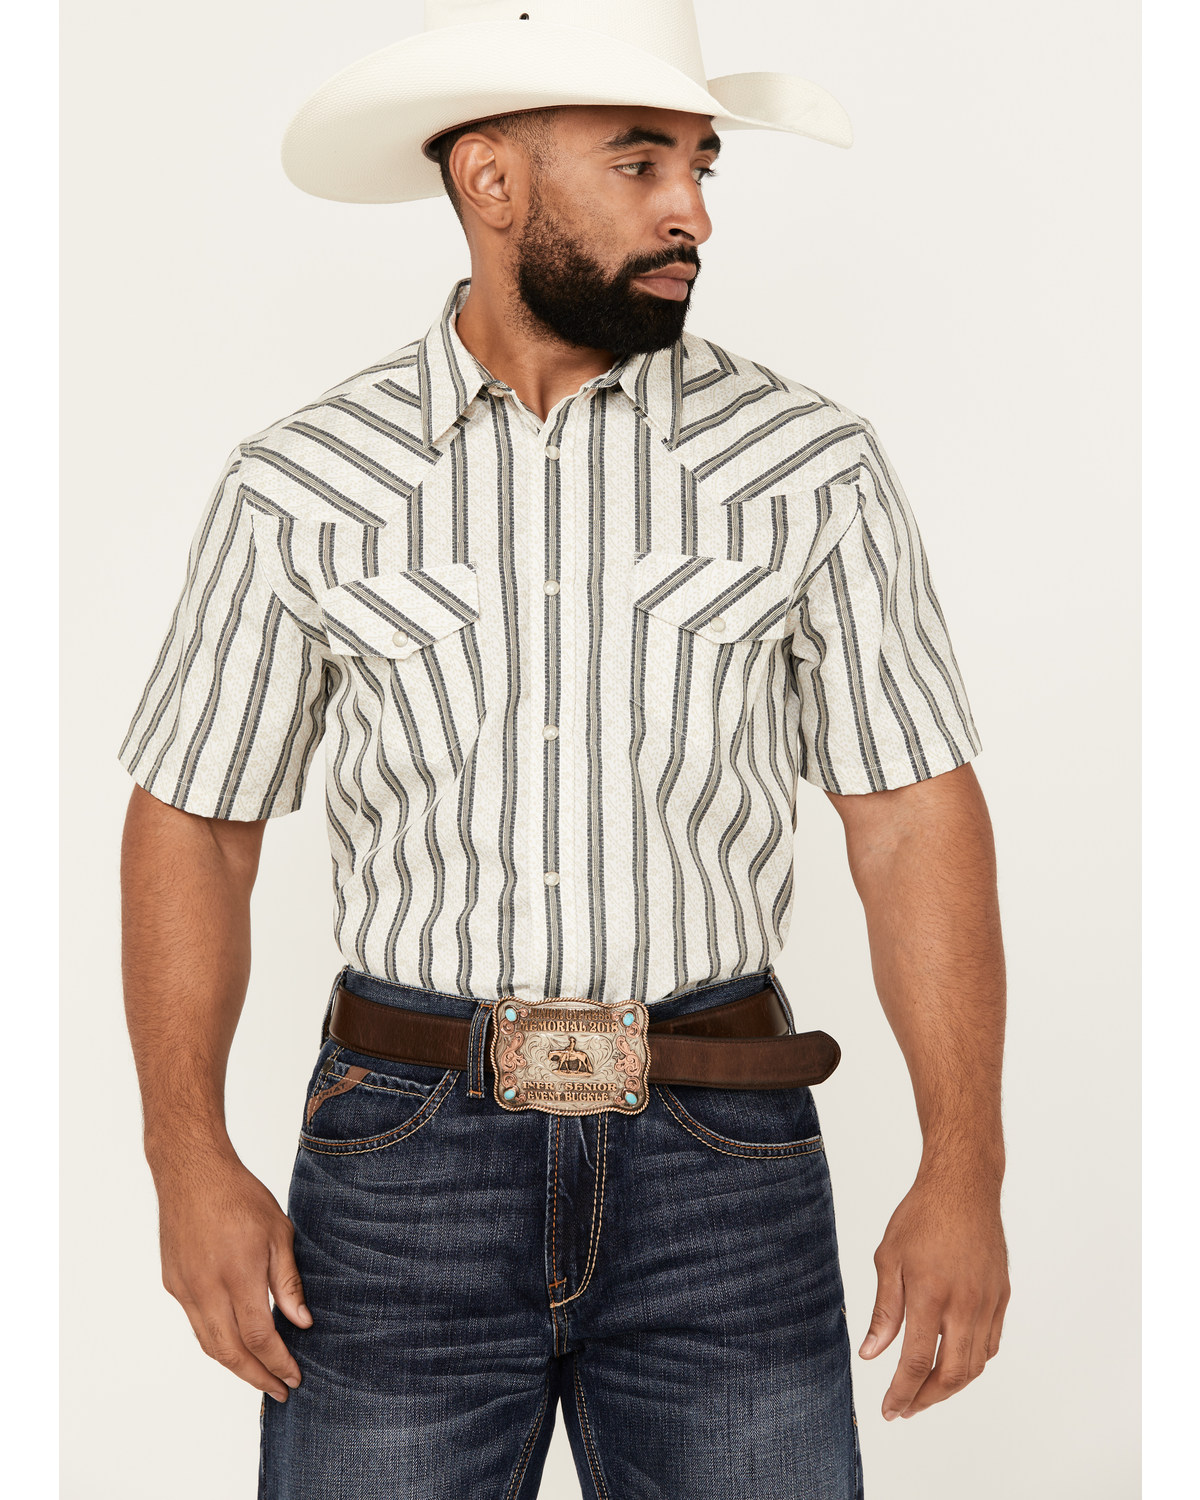 Gibson Trading Co Men's Side Swipe Vertical Striped Print Short Sleeve Snap Western Shirt